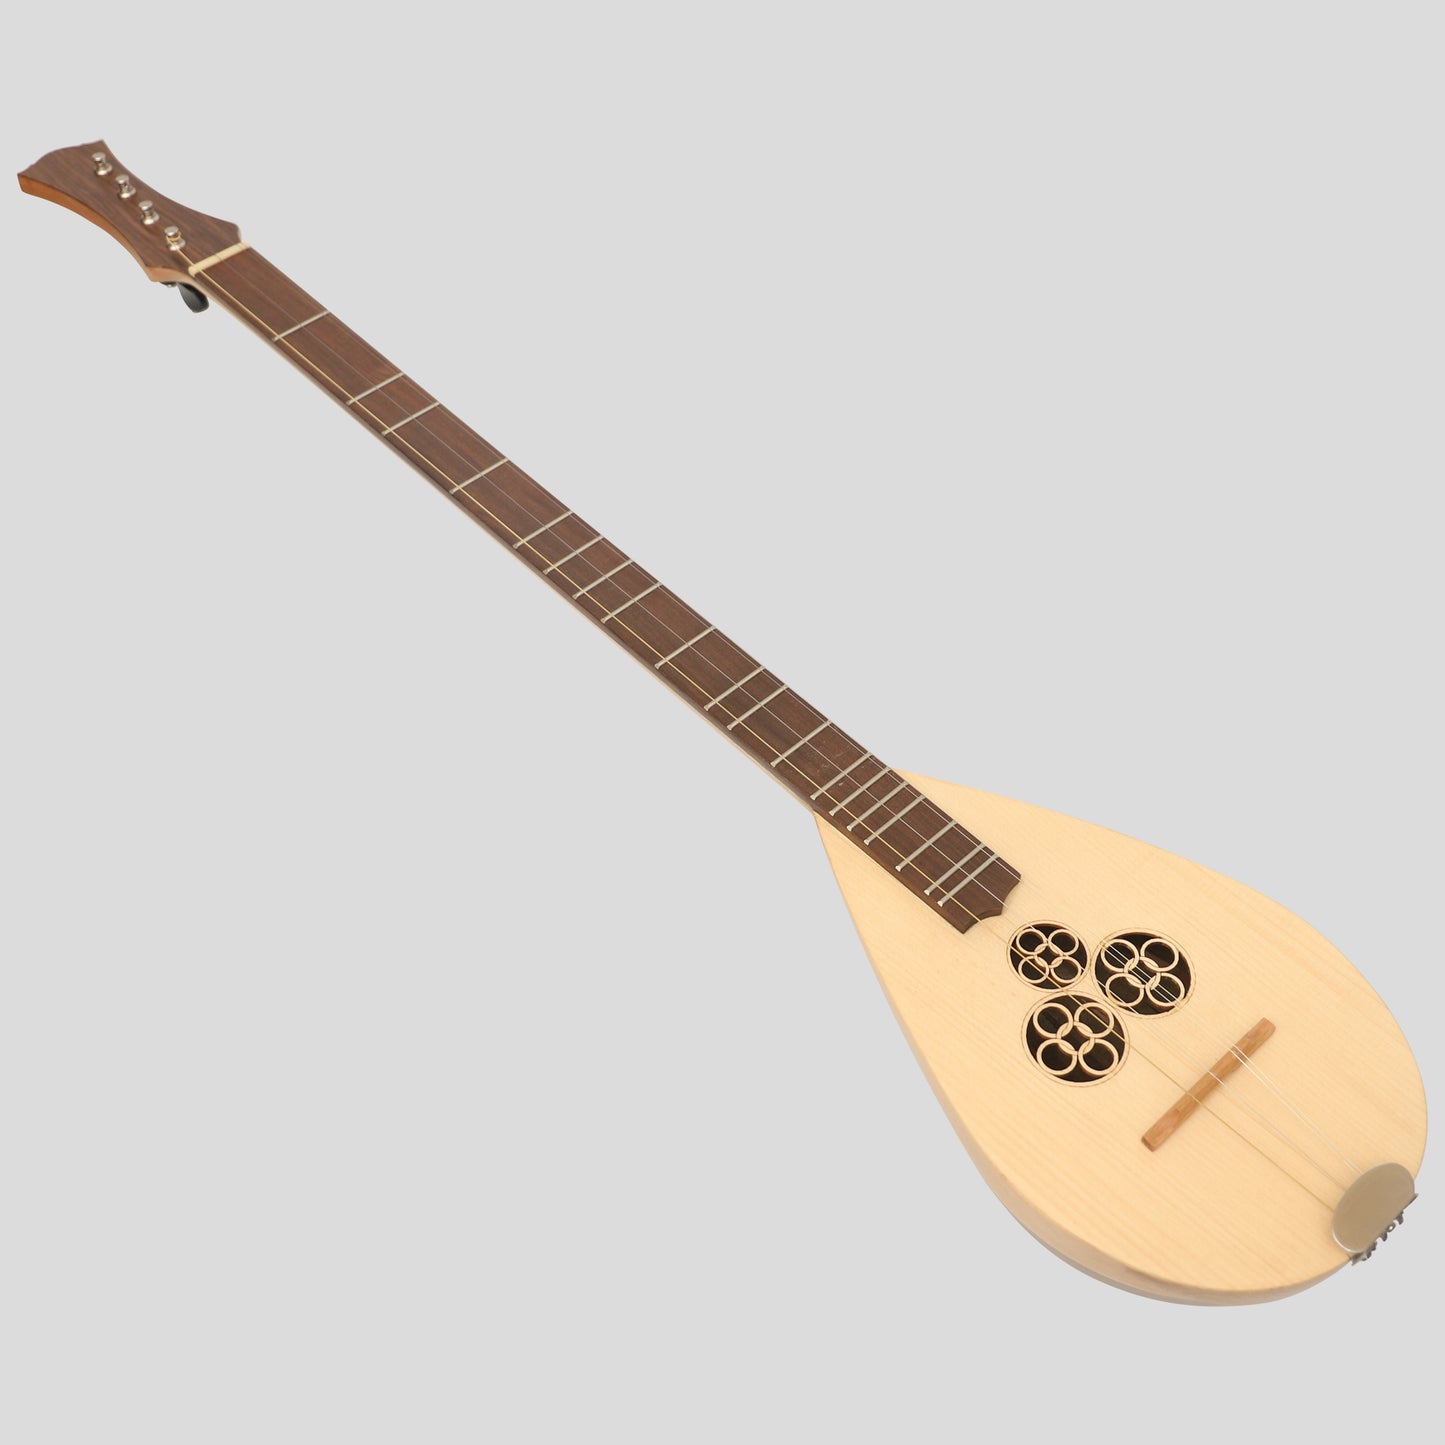 Heartland Wildwood Dulcimer Banjo, 4 String Variegated Walnut Lacewood